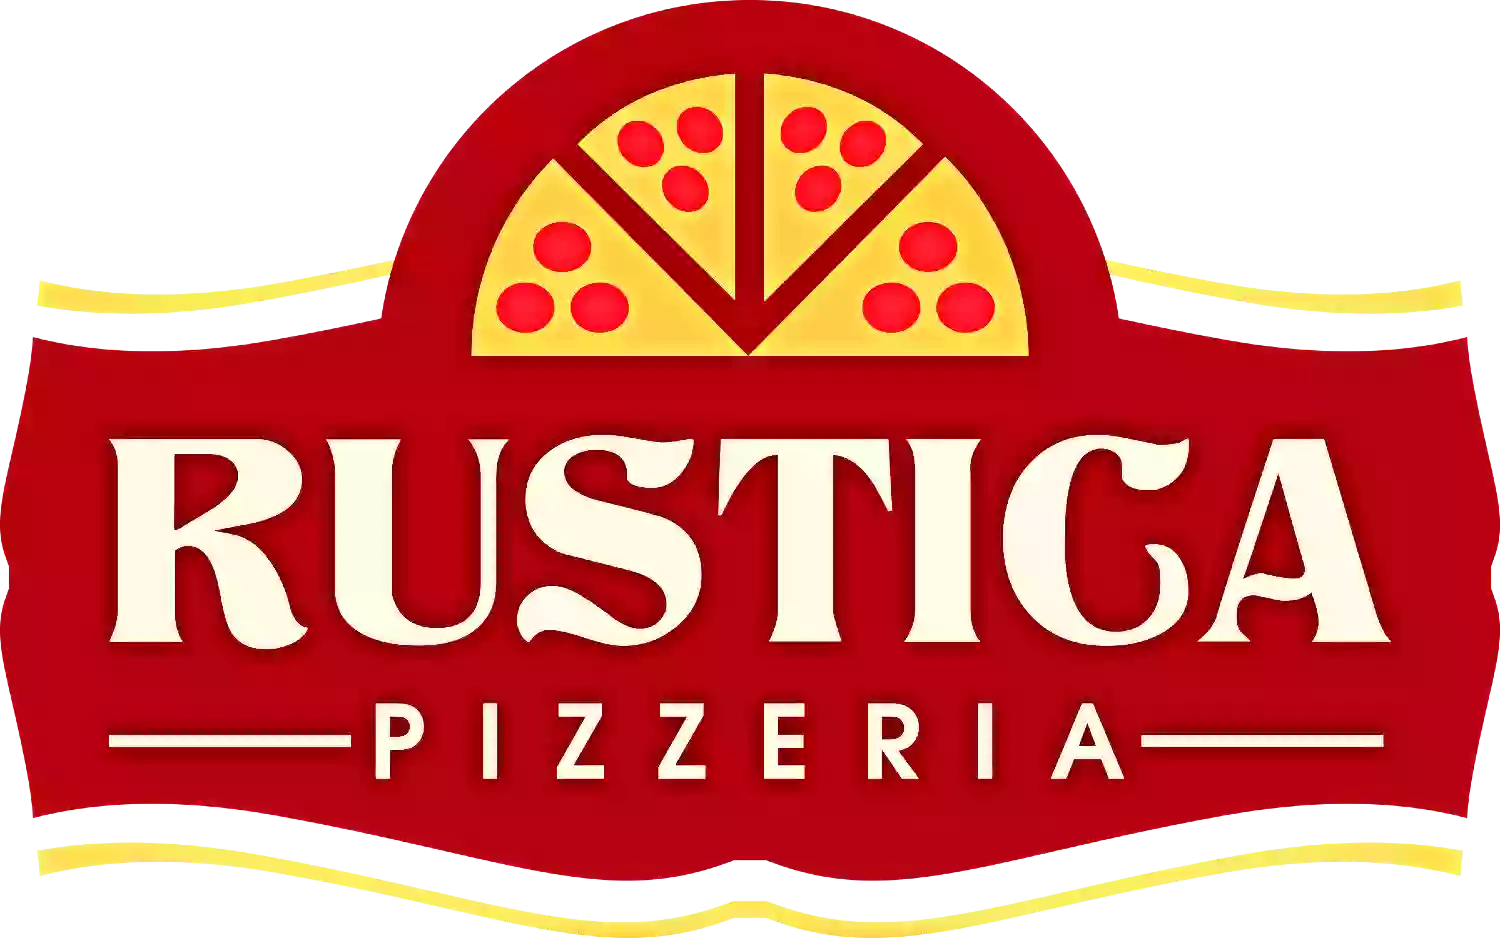 Rustica Pizzeria’s